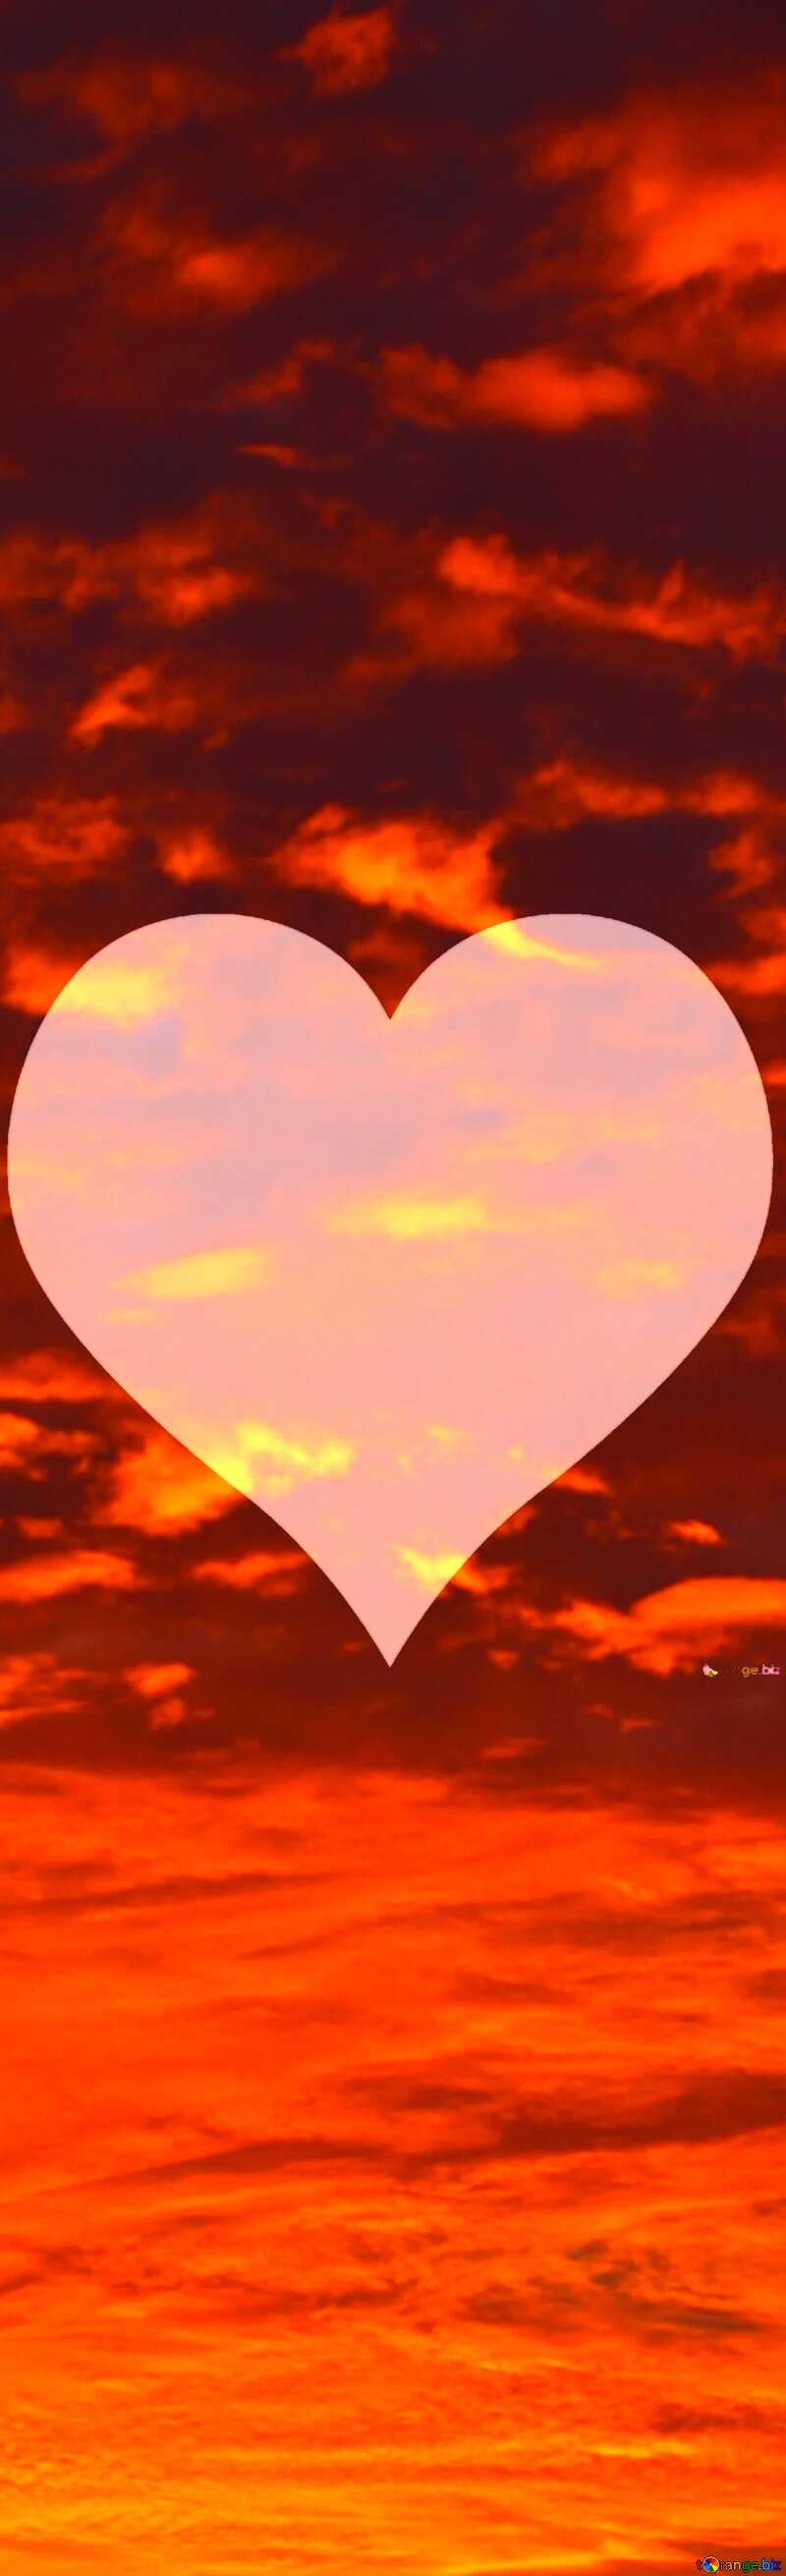 Red sunset Love Heart banner background №44615